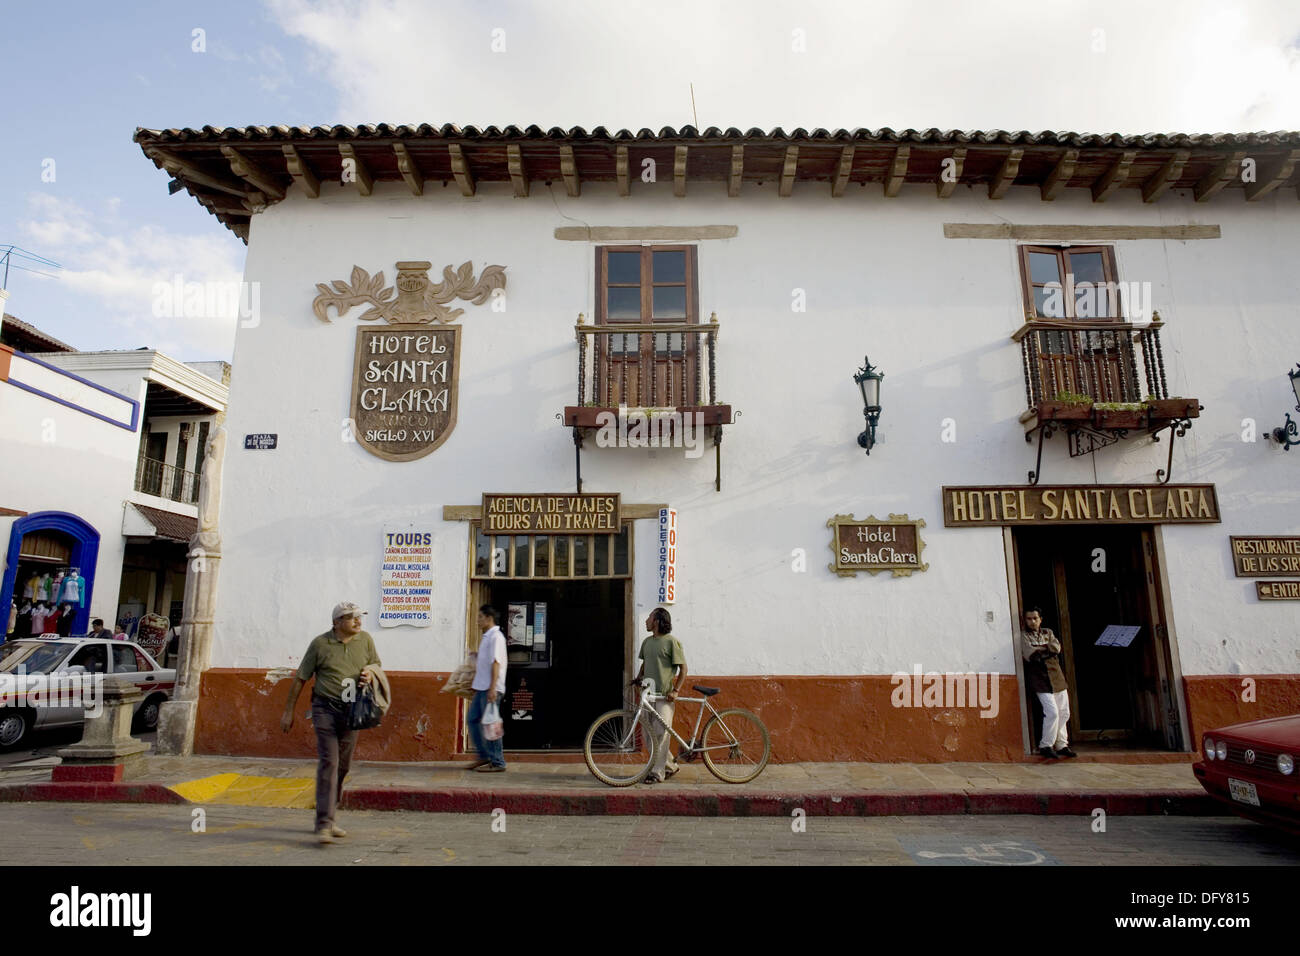 Hotel Santa Clara, San Cristobal de las Casas, Chiapas, Mexico Stock Photo  - Alamy